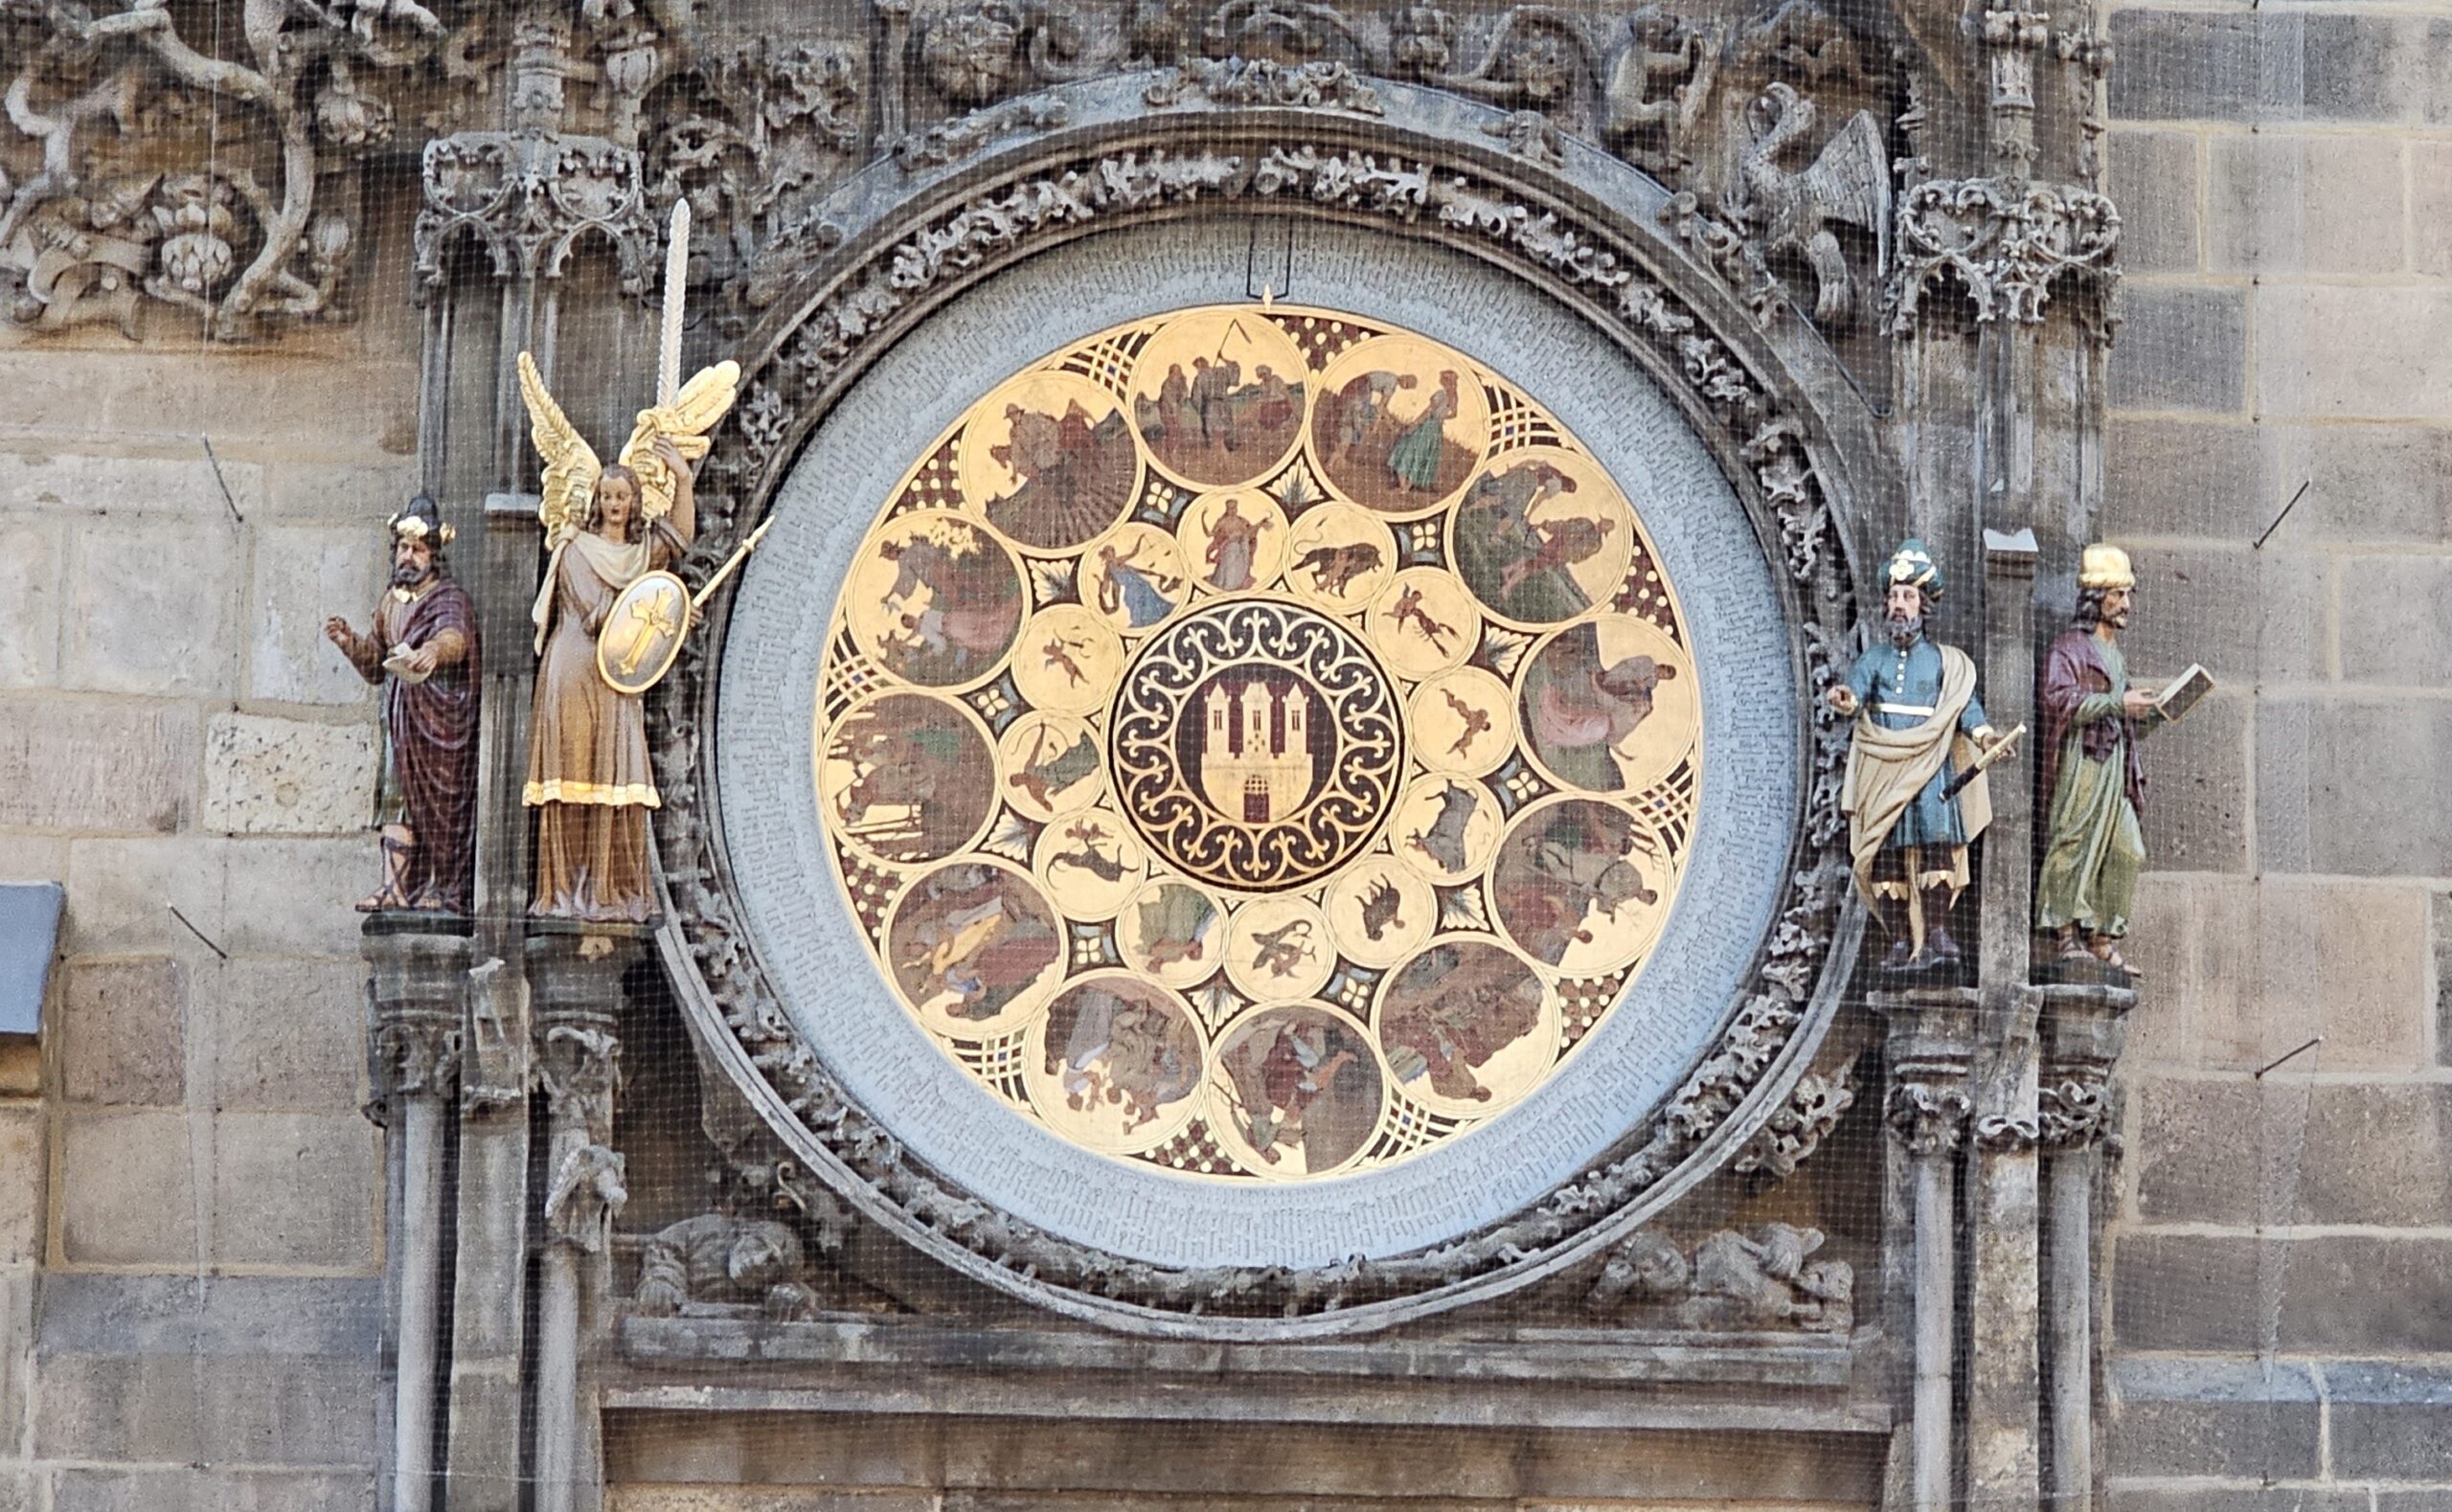 The Calendar Dial of the Prague Astronomical Clock. Image by 360onhistory.com